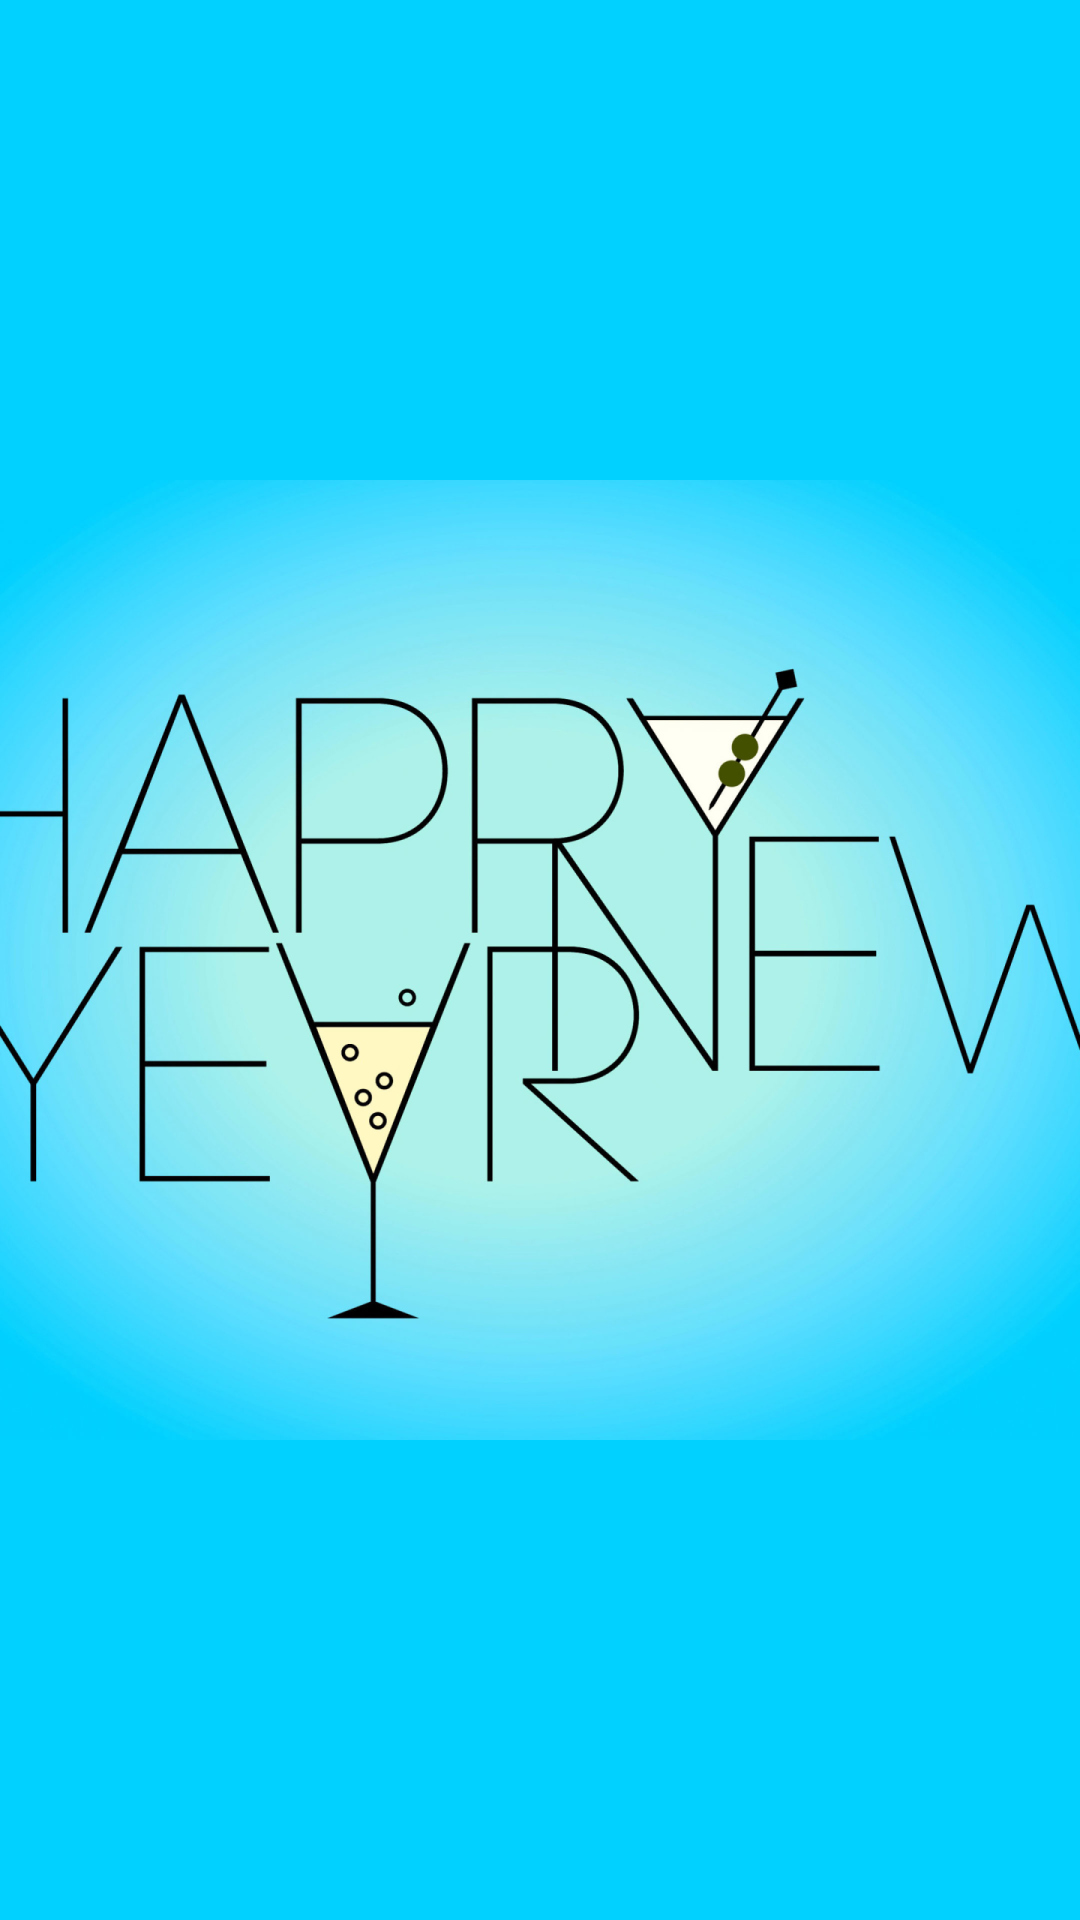 Das New Year's Greeting 2013 Wallpaper 1080x1920